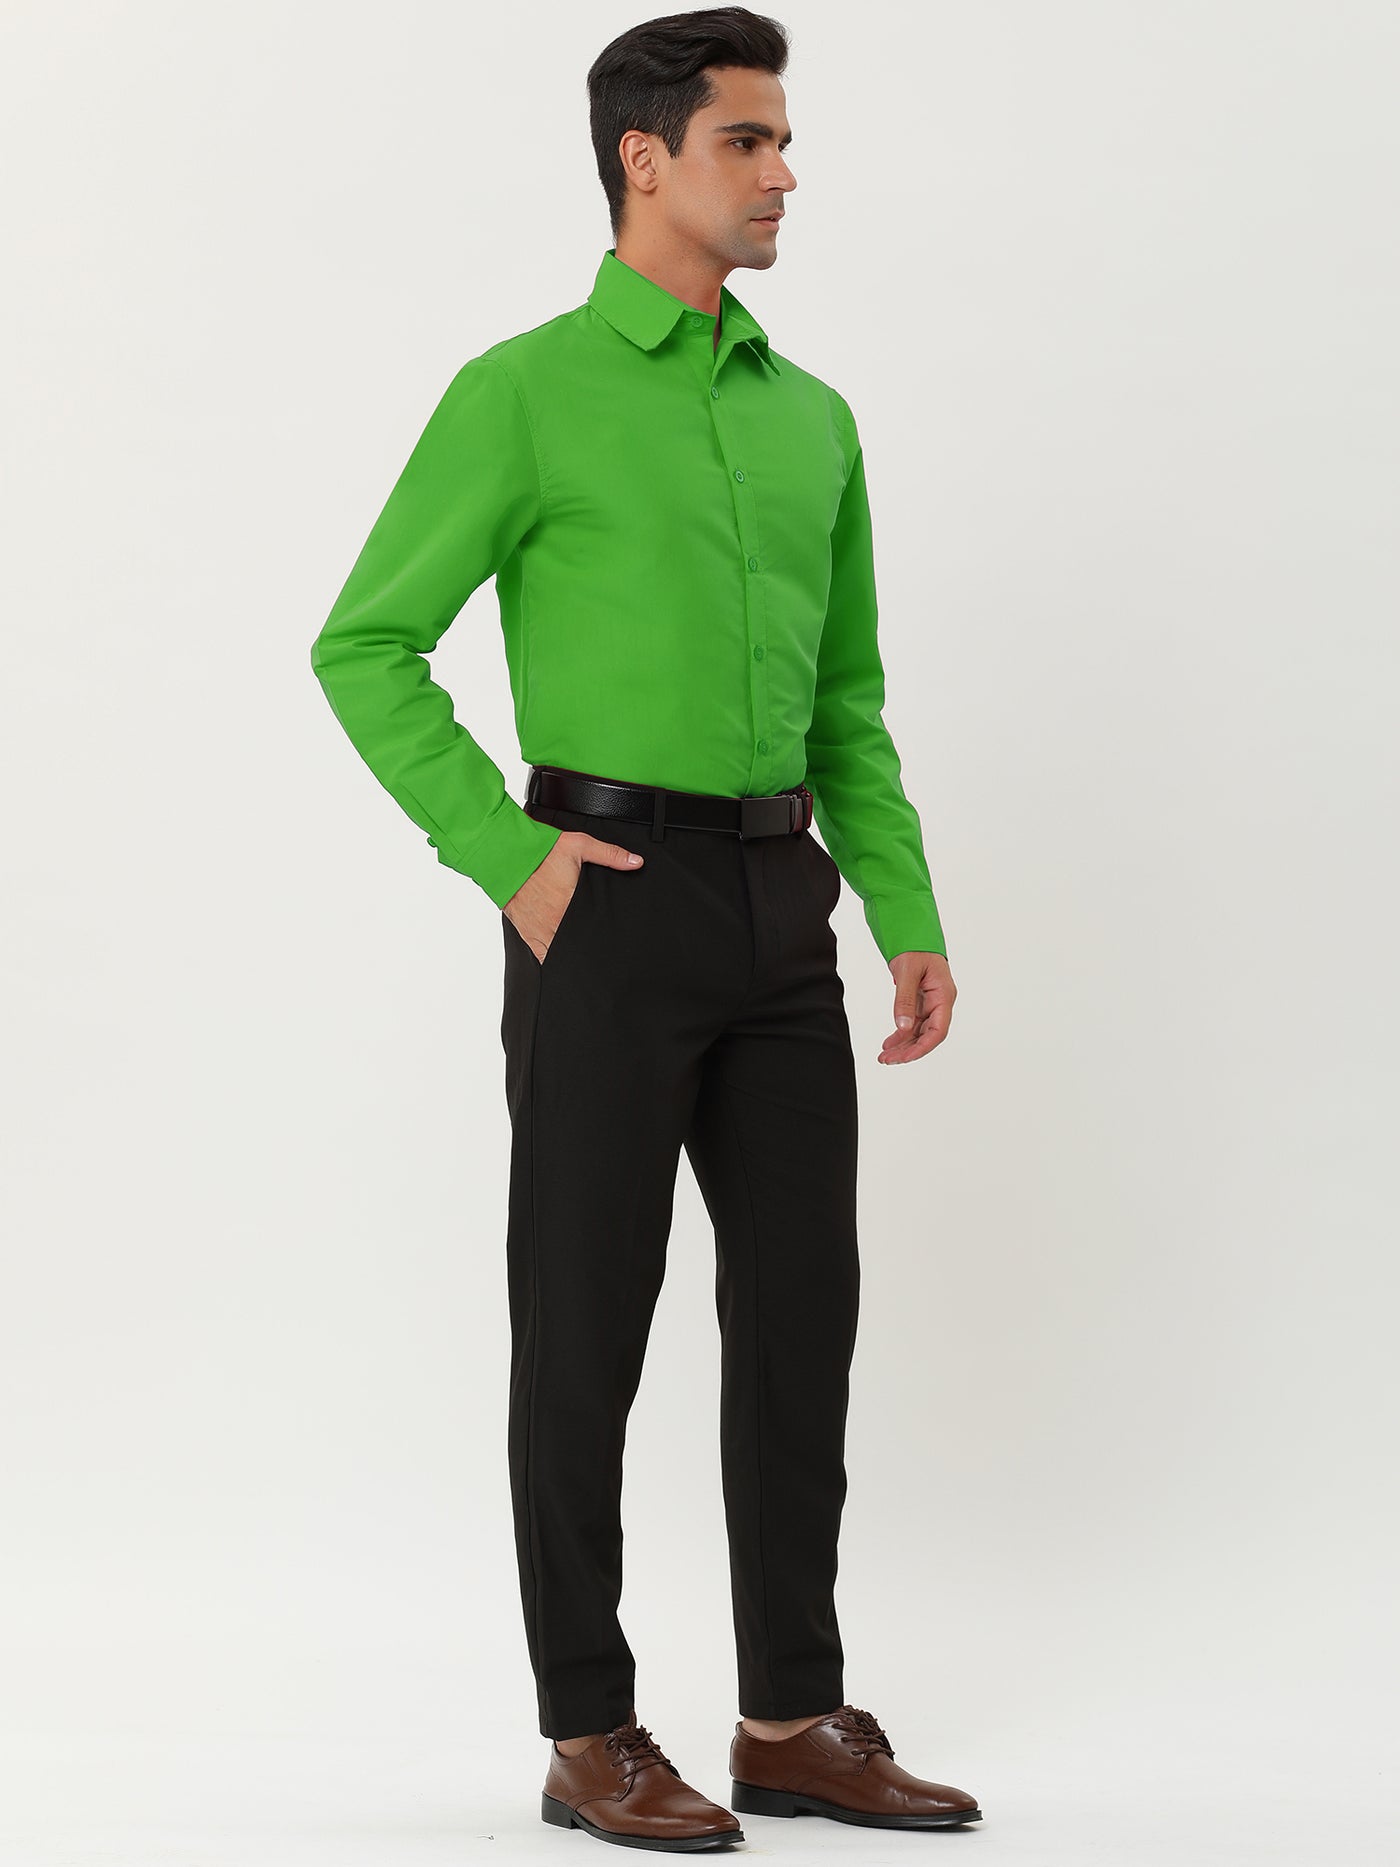 Bublédon Smart Casual Lapel Long Sleeve Button Solid Shirts